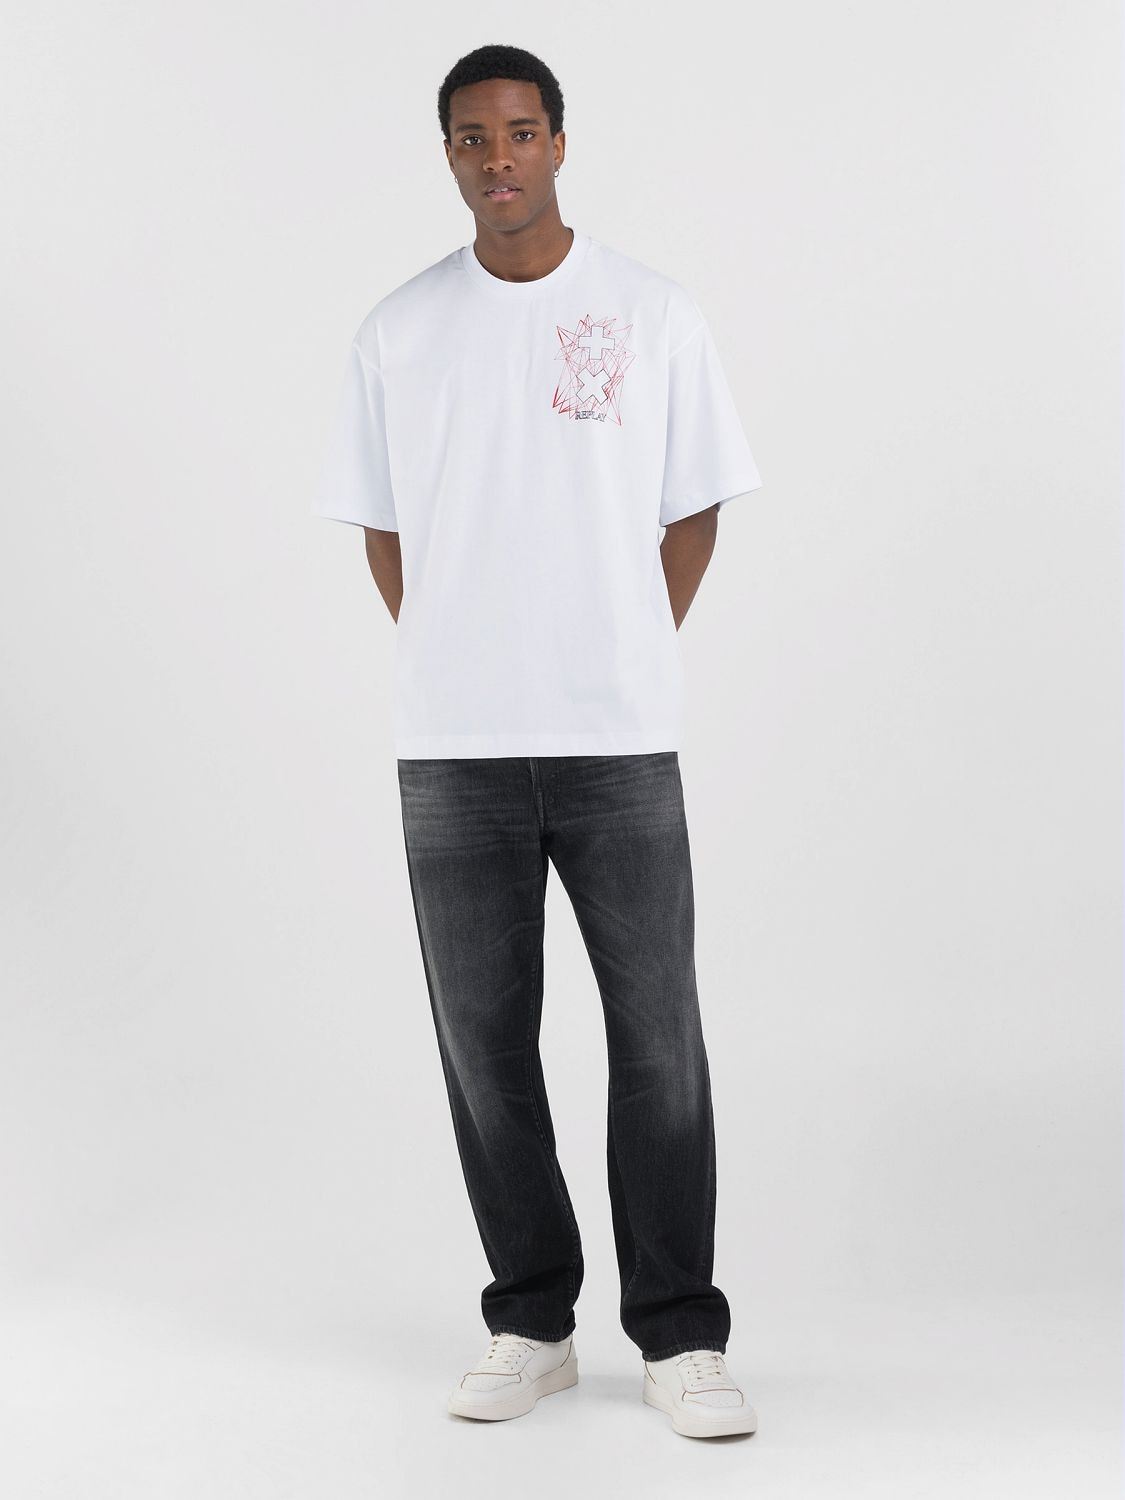 Replay T-Shirt »TShirt Martin Garrix«